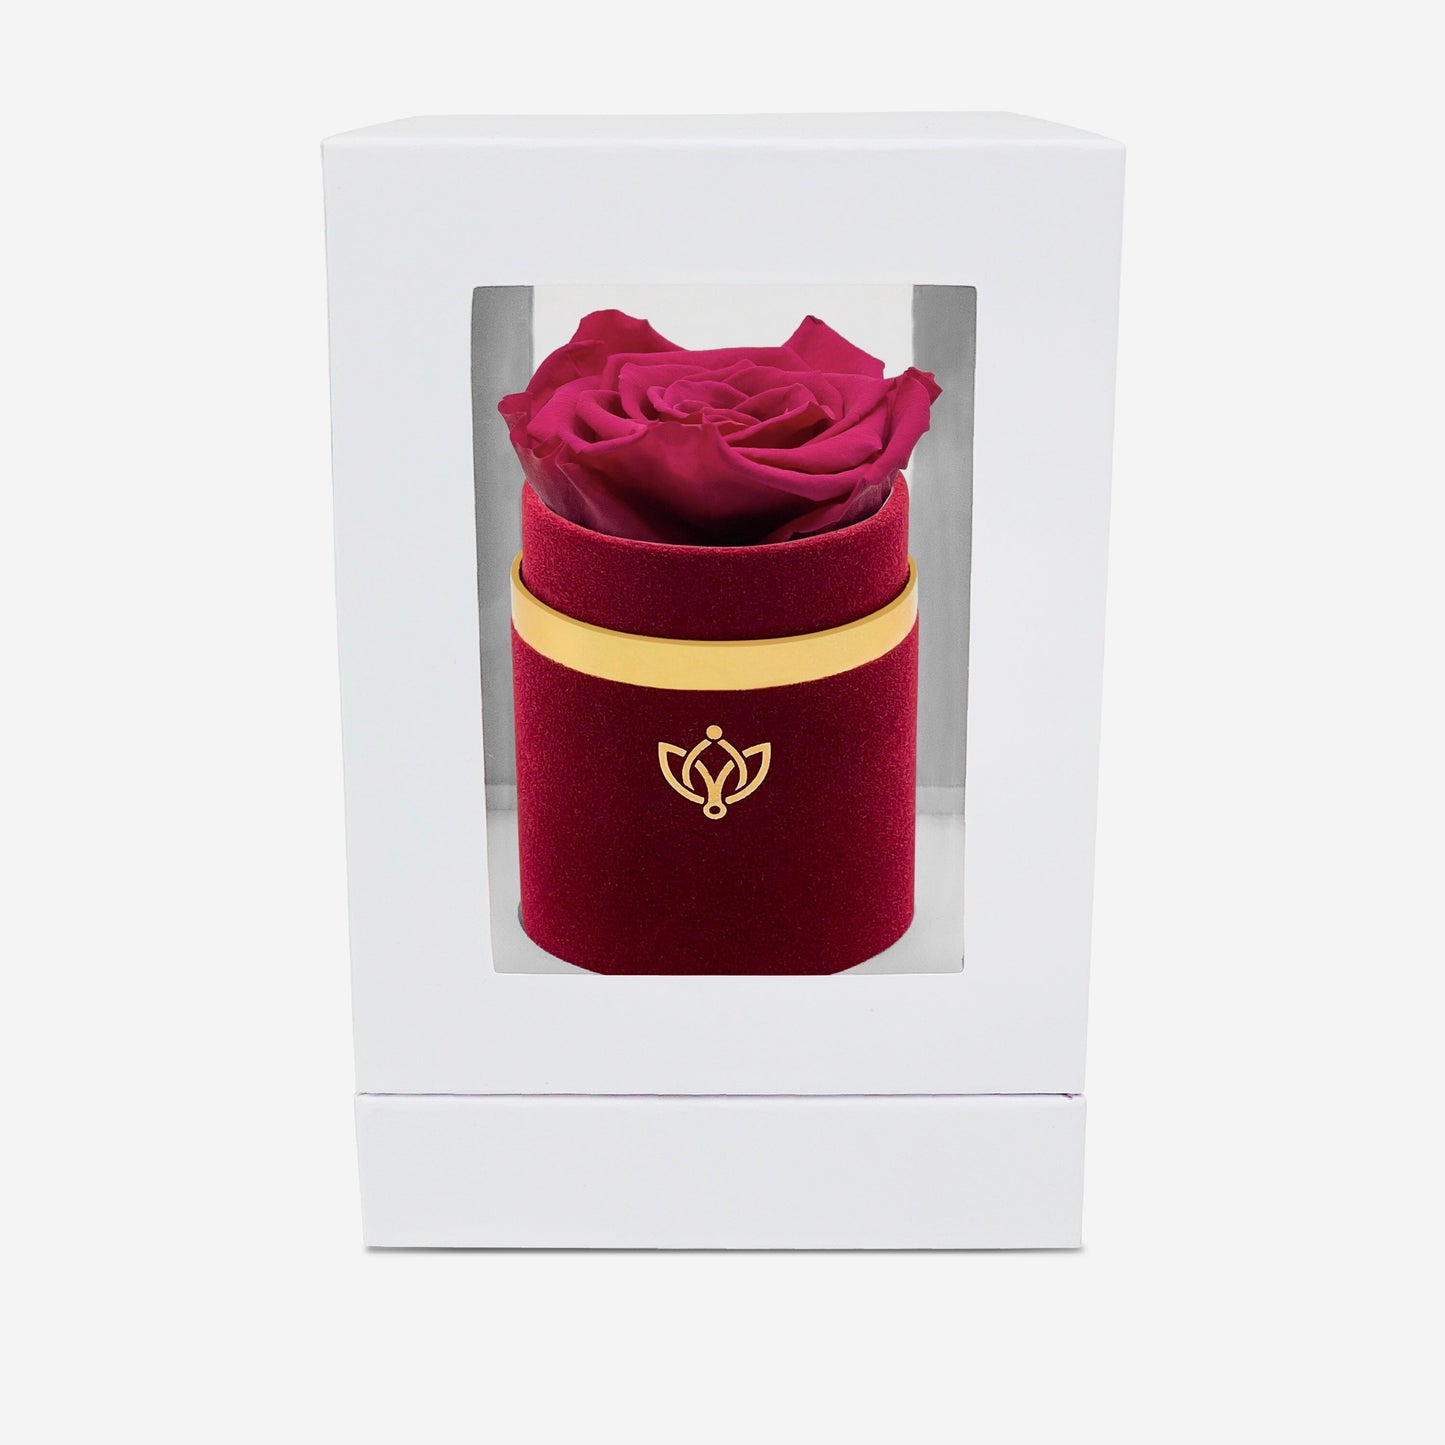 Single Bordeaux Suede Box | Magenta Rose - The Million Roses